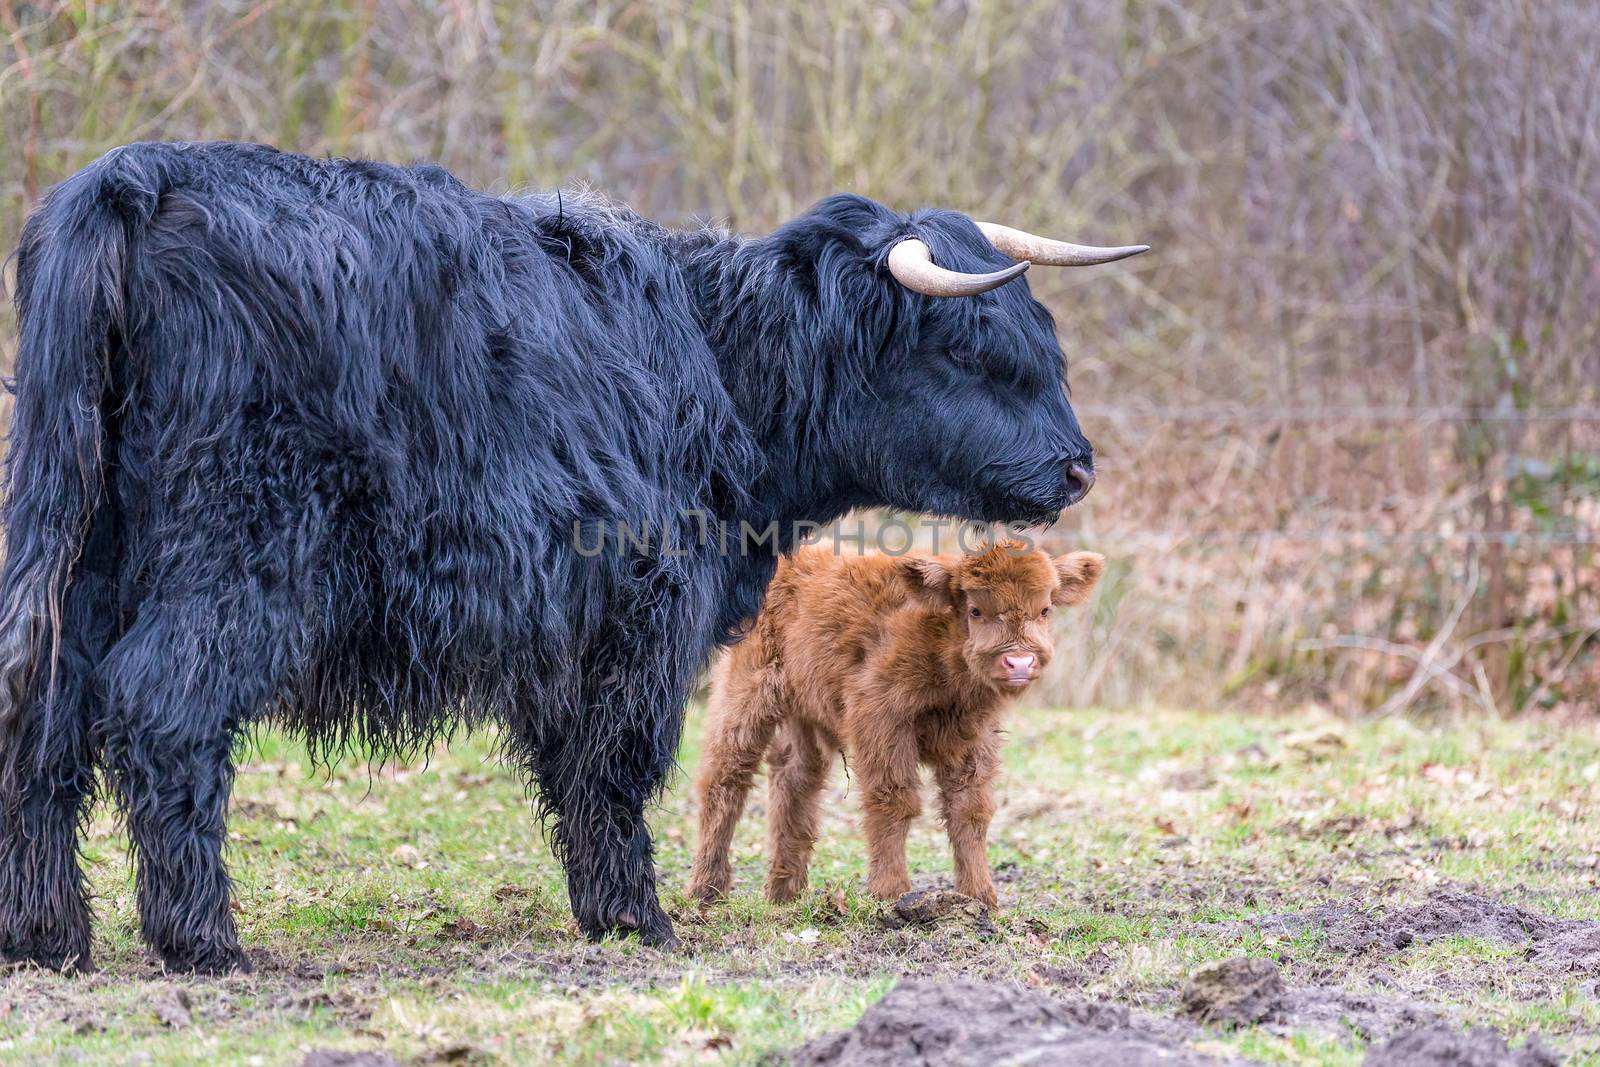 Black Scottish highlander mother cow with newborn brown calf in spring season